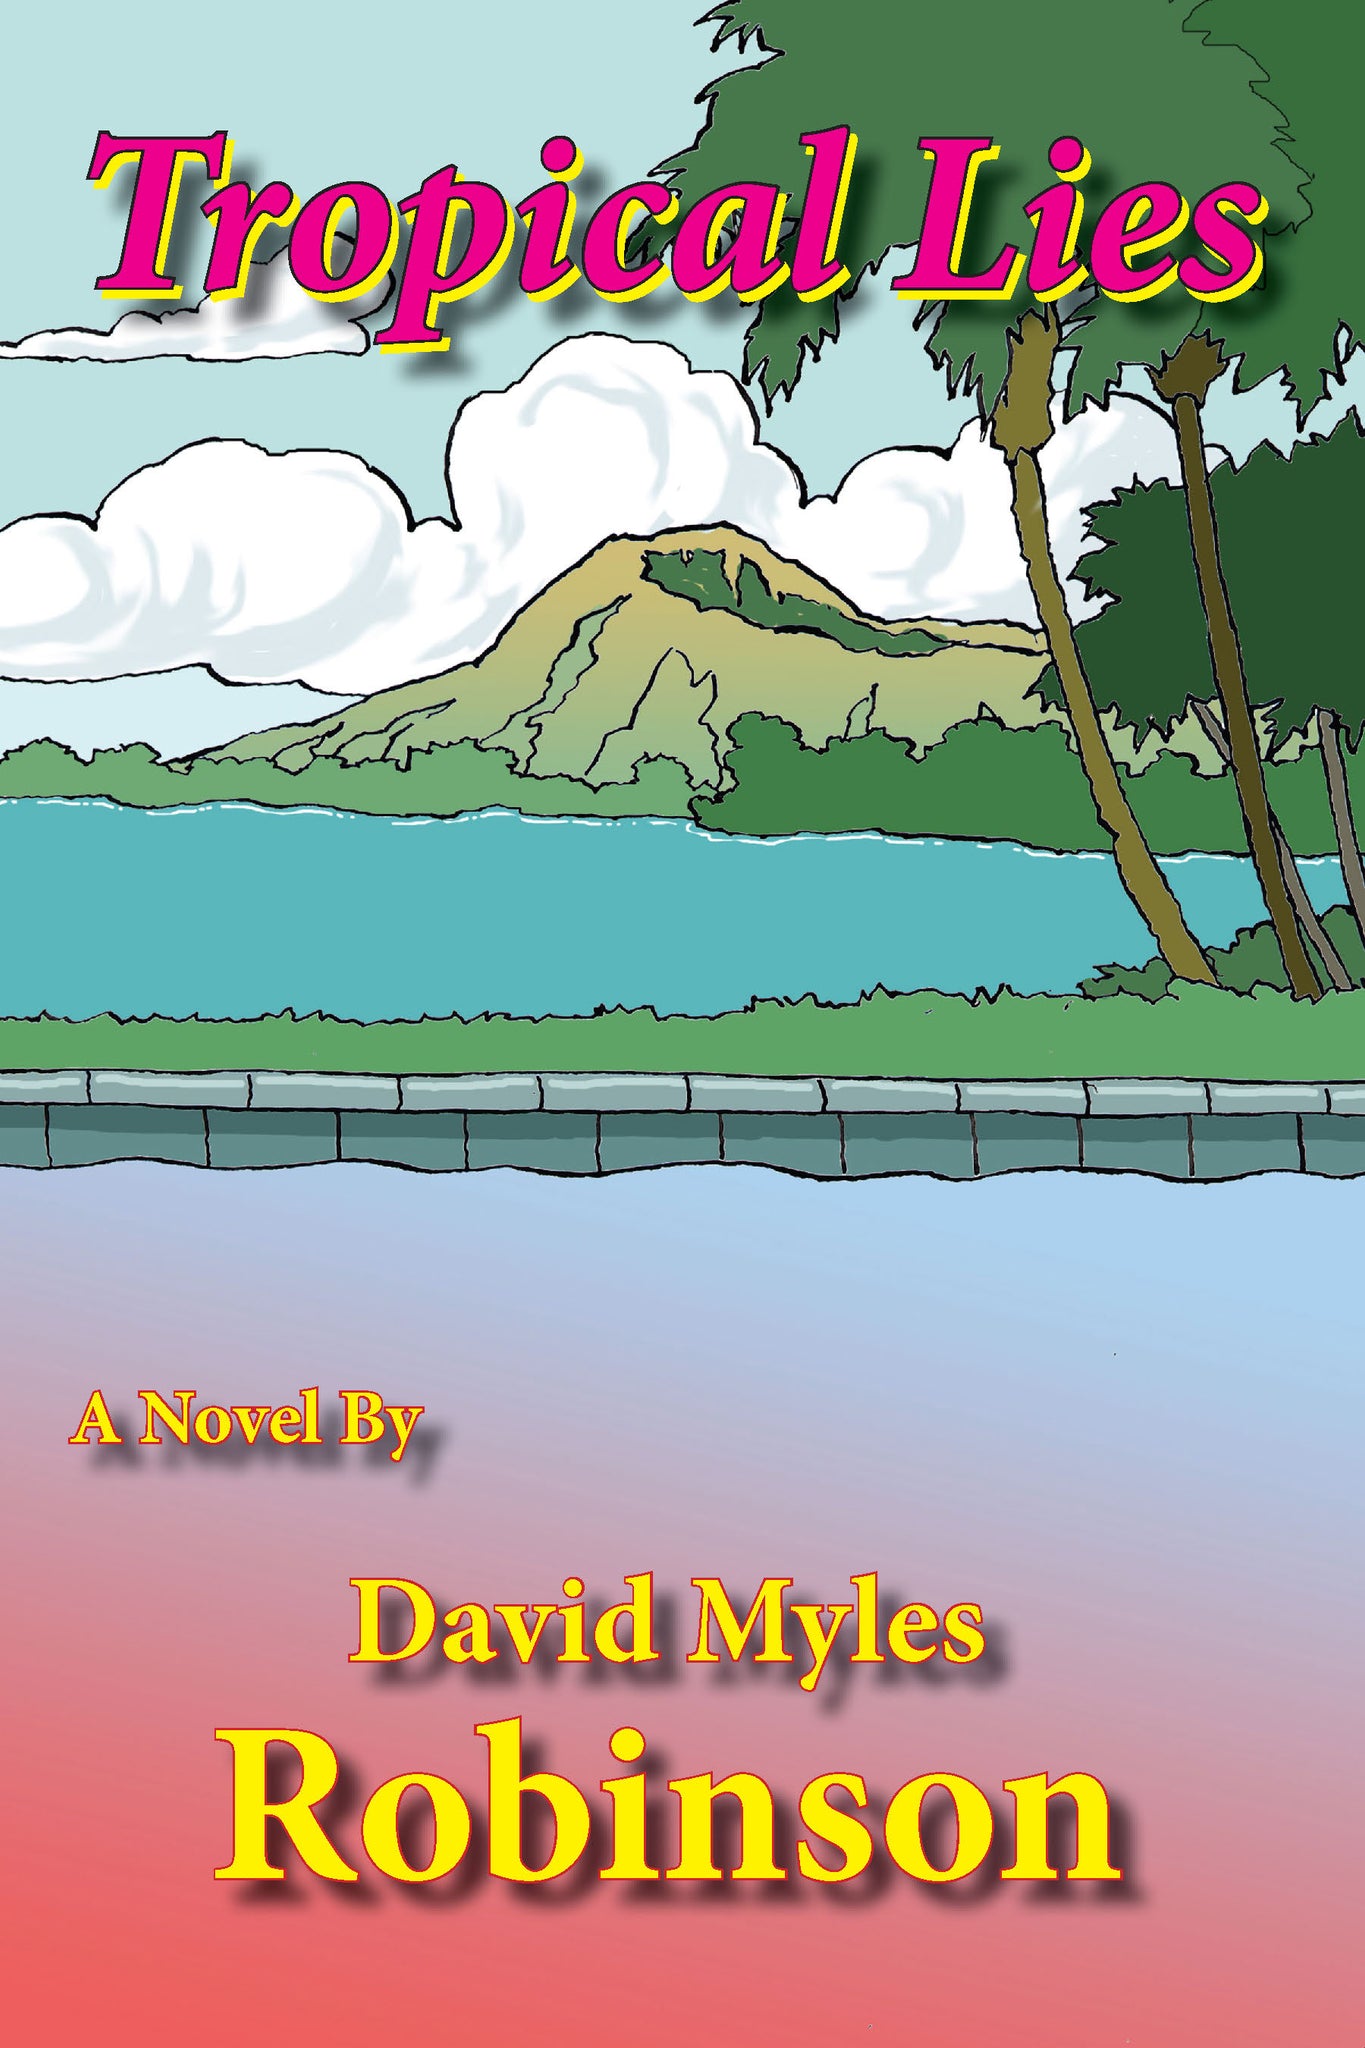 Tropical Lies by David Myles Robinson